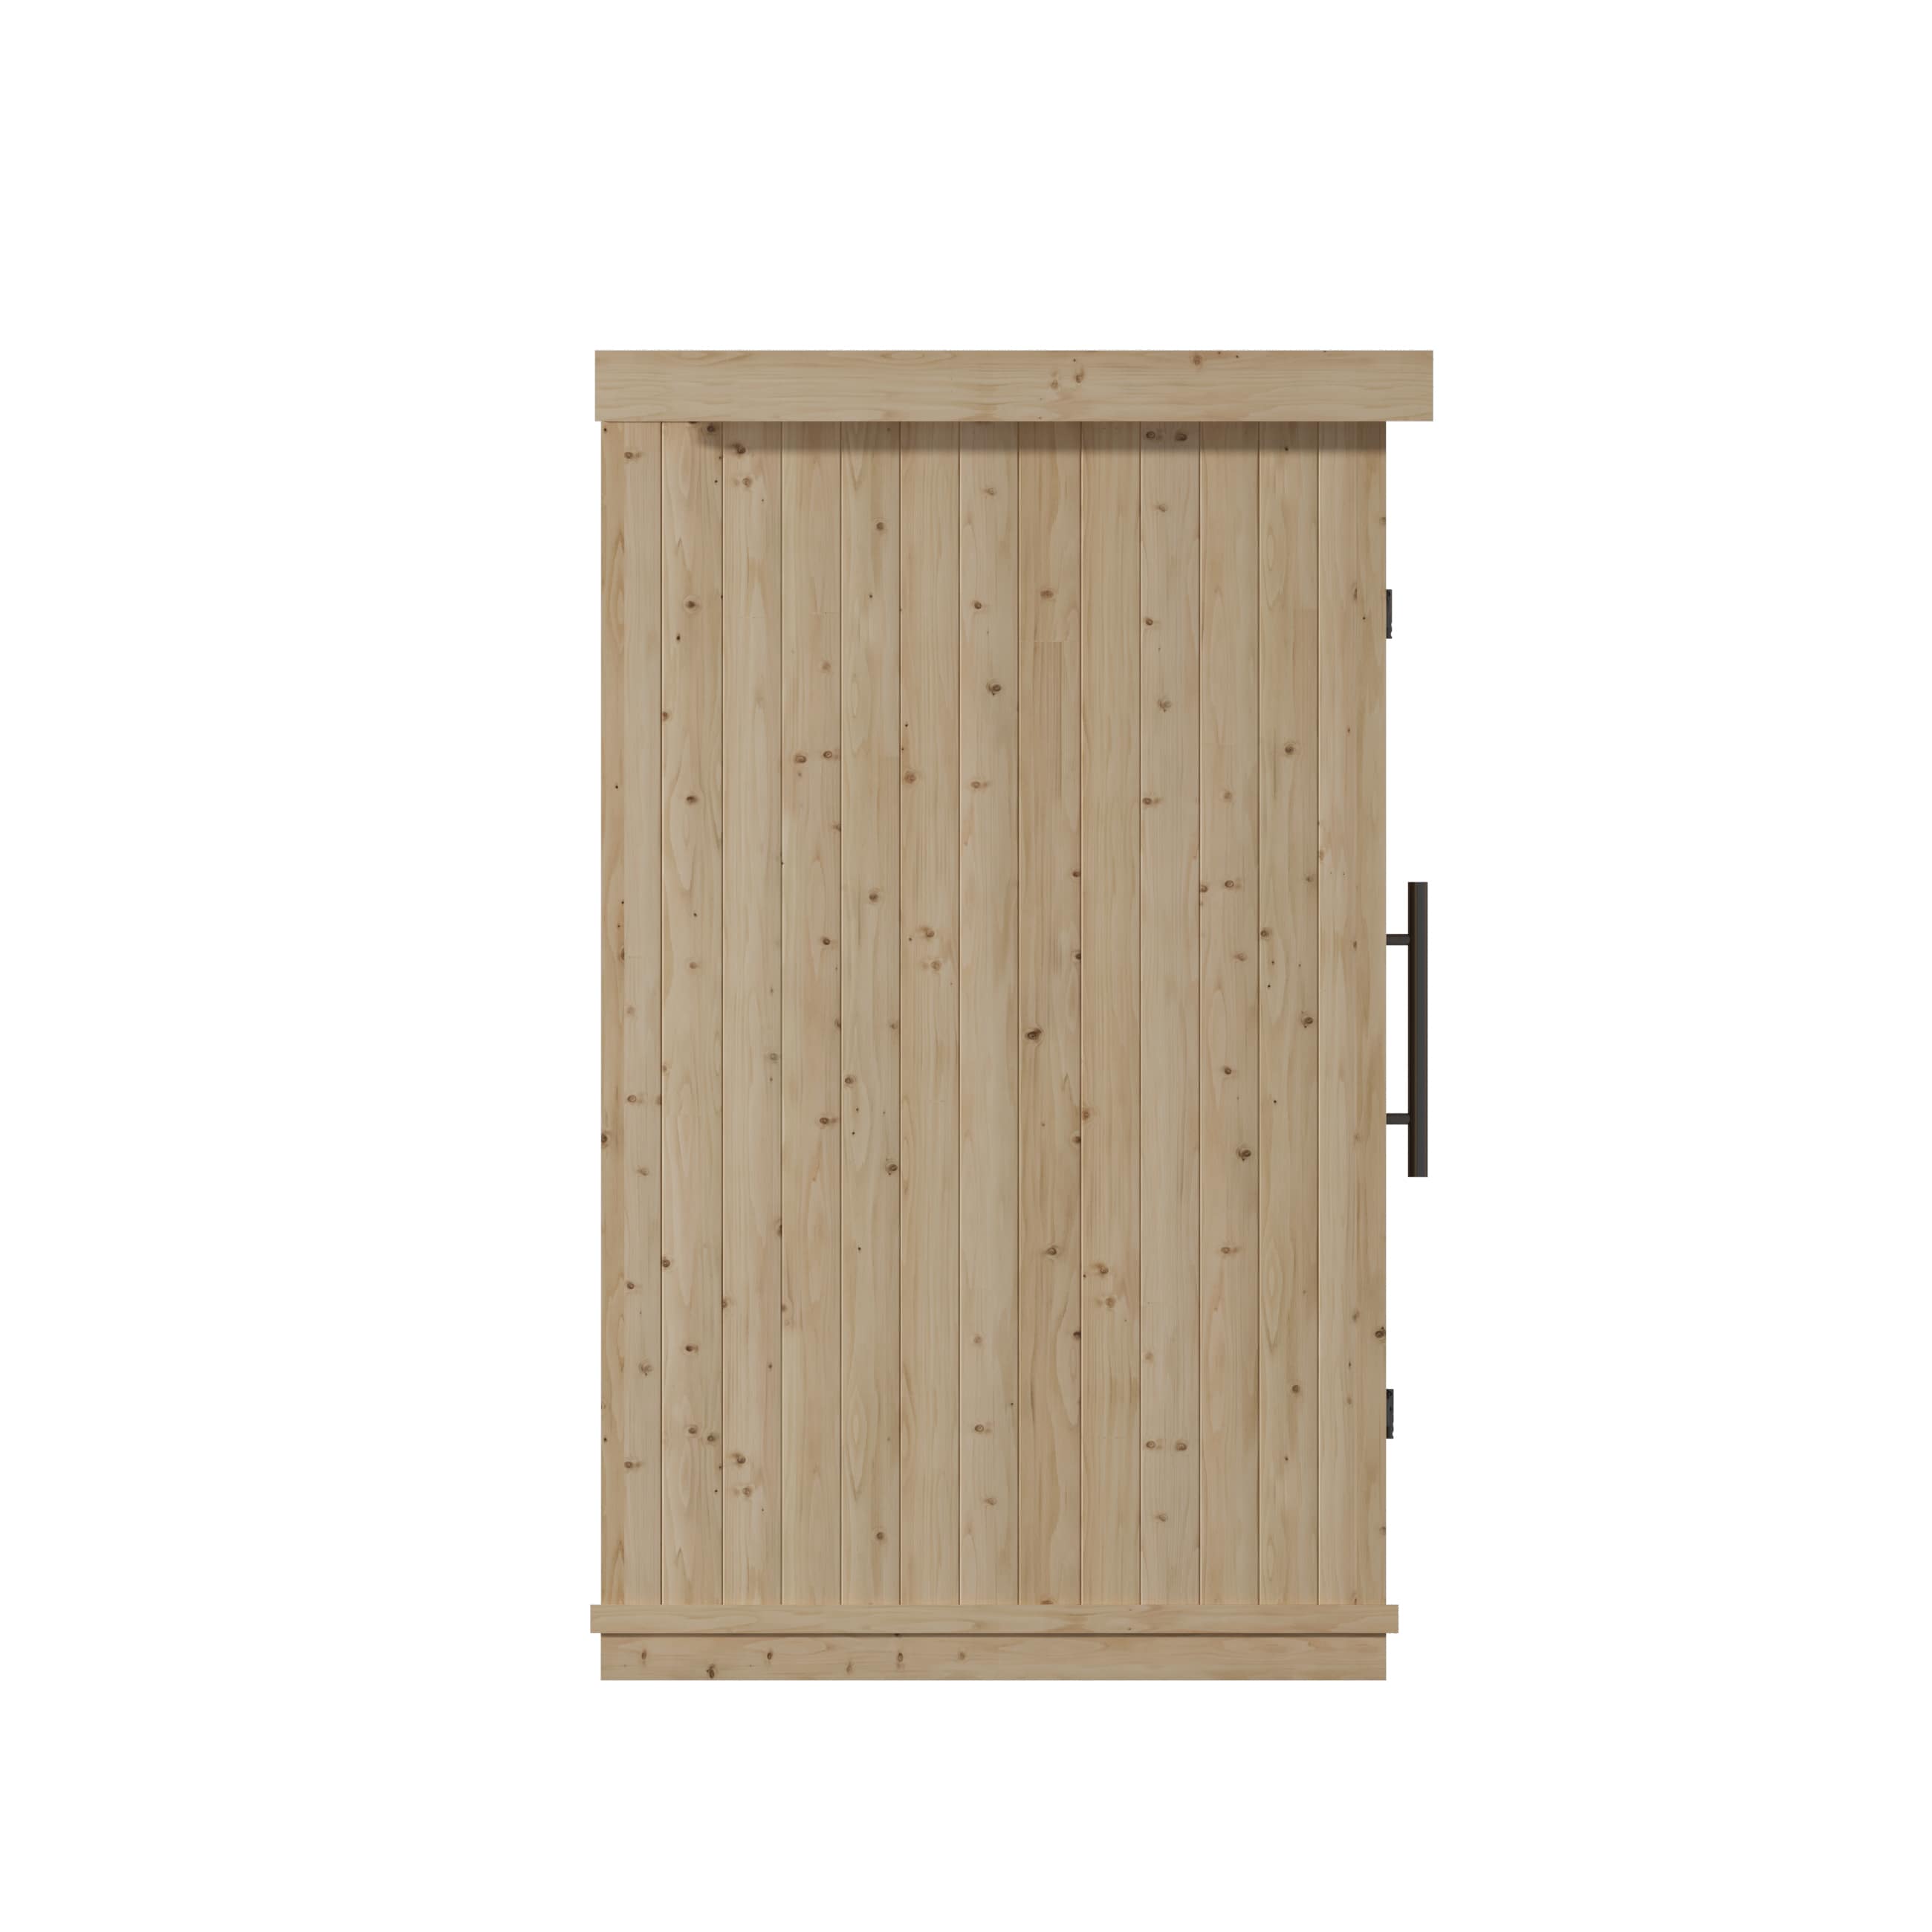 SaunaLife Model X6 Indoor Home Sauna - Purely Relaxation